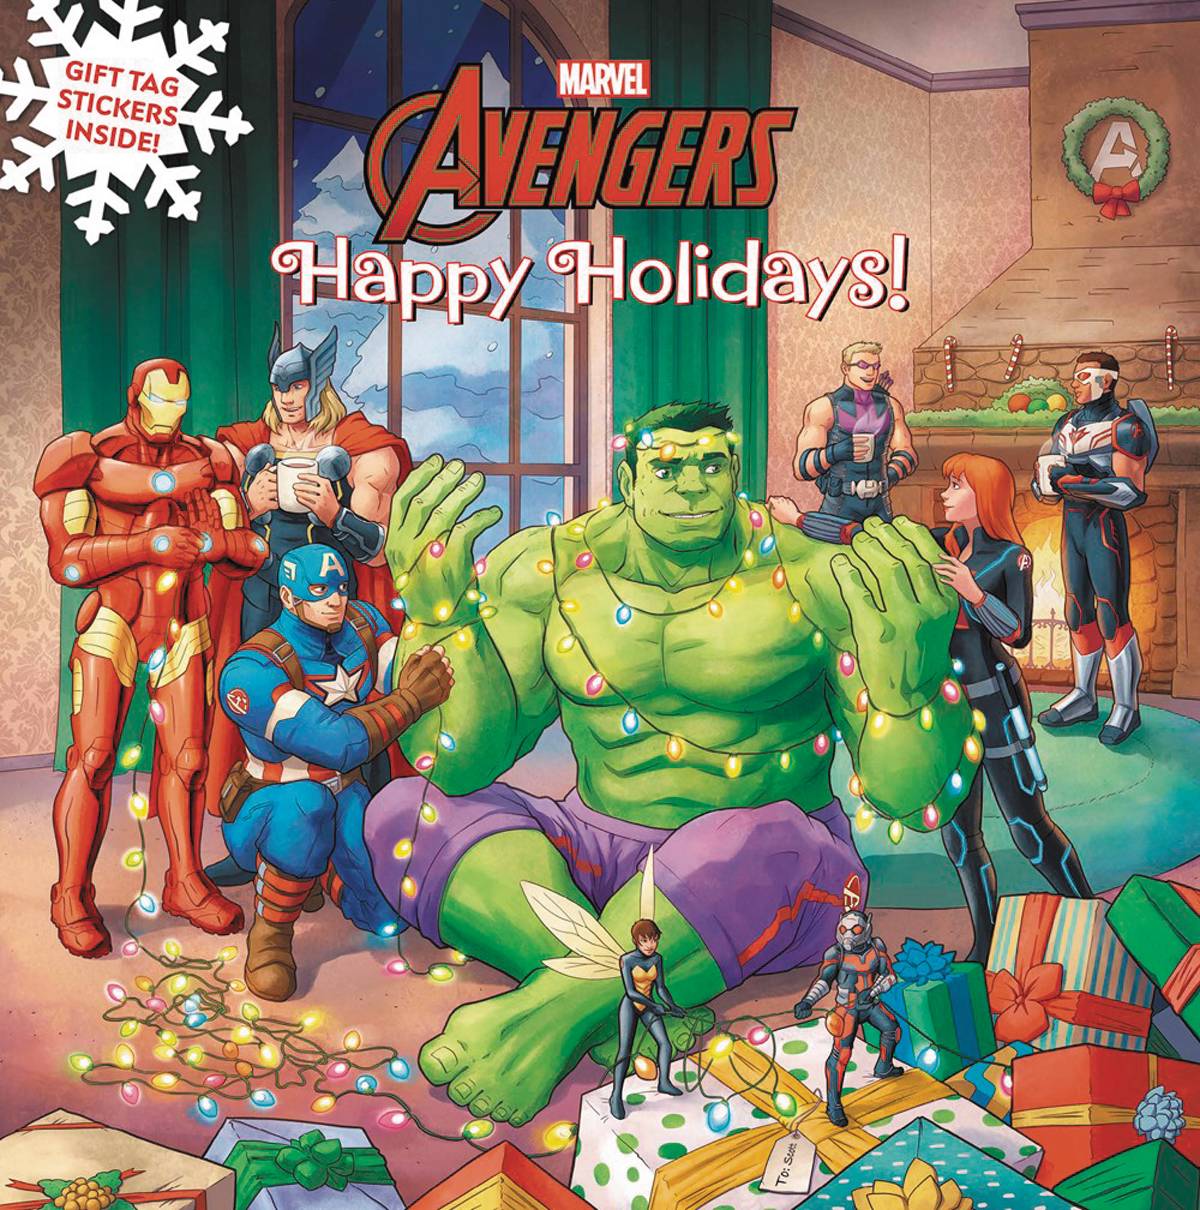 Marvel Avengers Happy Holidays Soft Cover